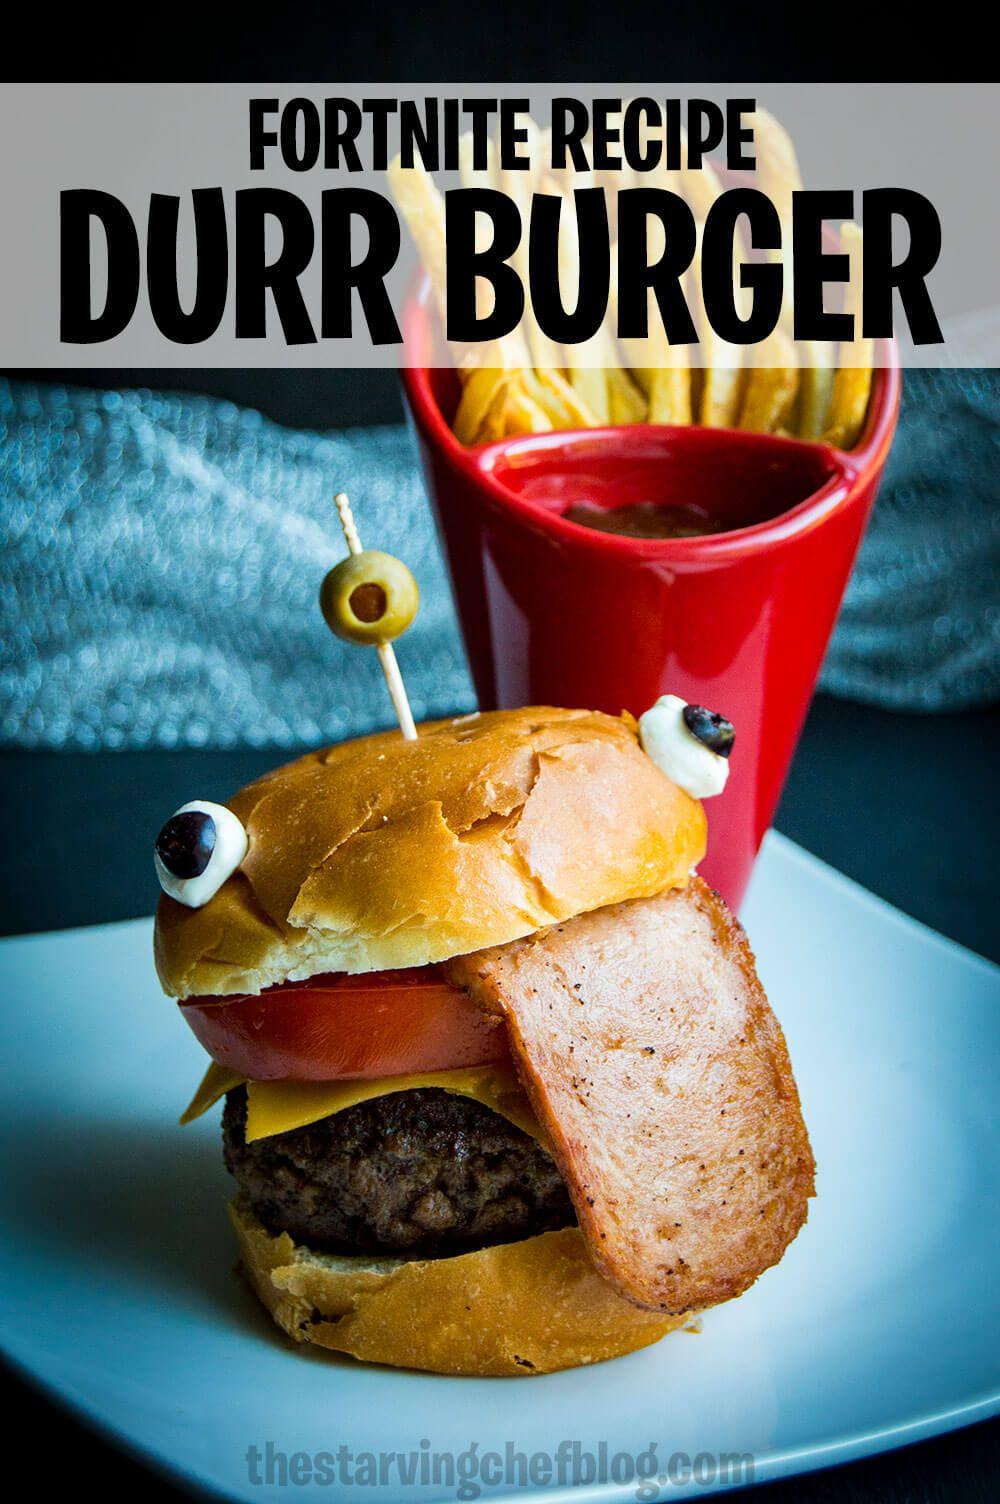 Durr Burger Logo - Durr Burger. Fortnite Recipe. The Starving Chef Blog